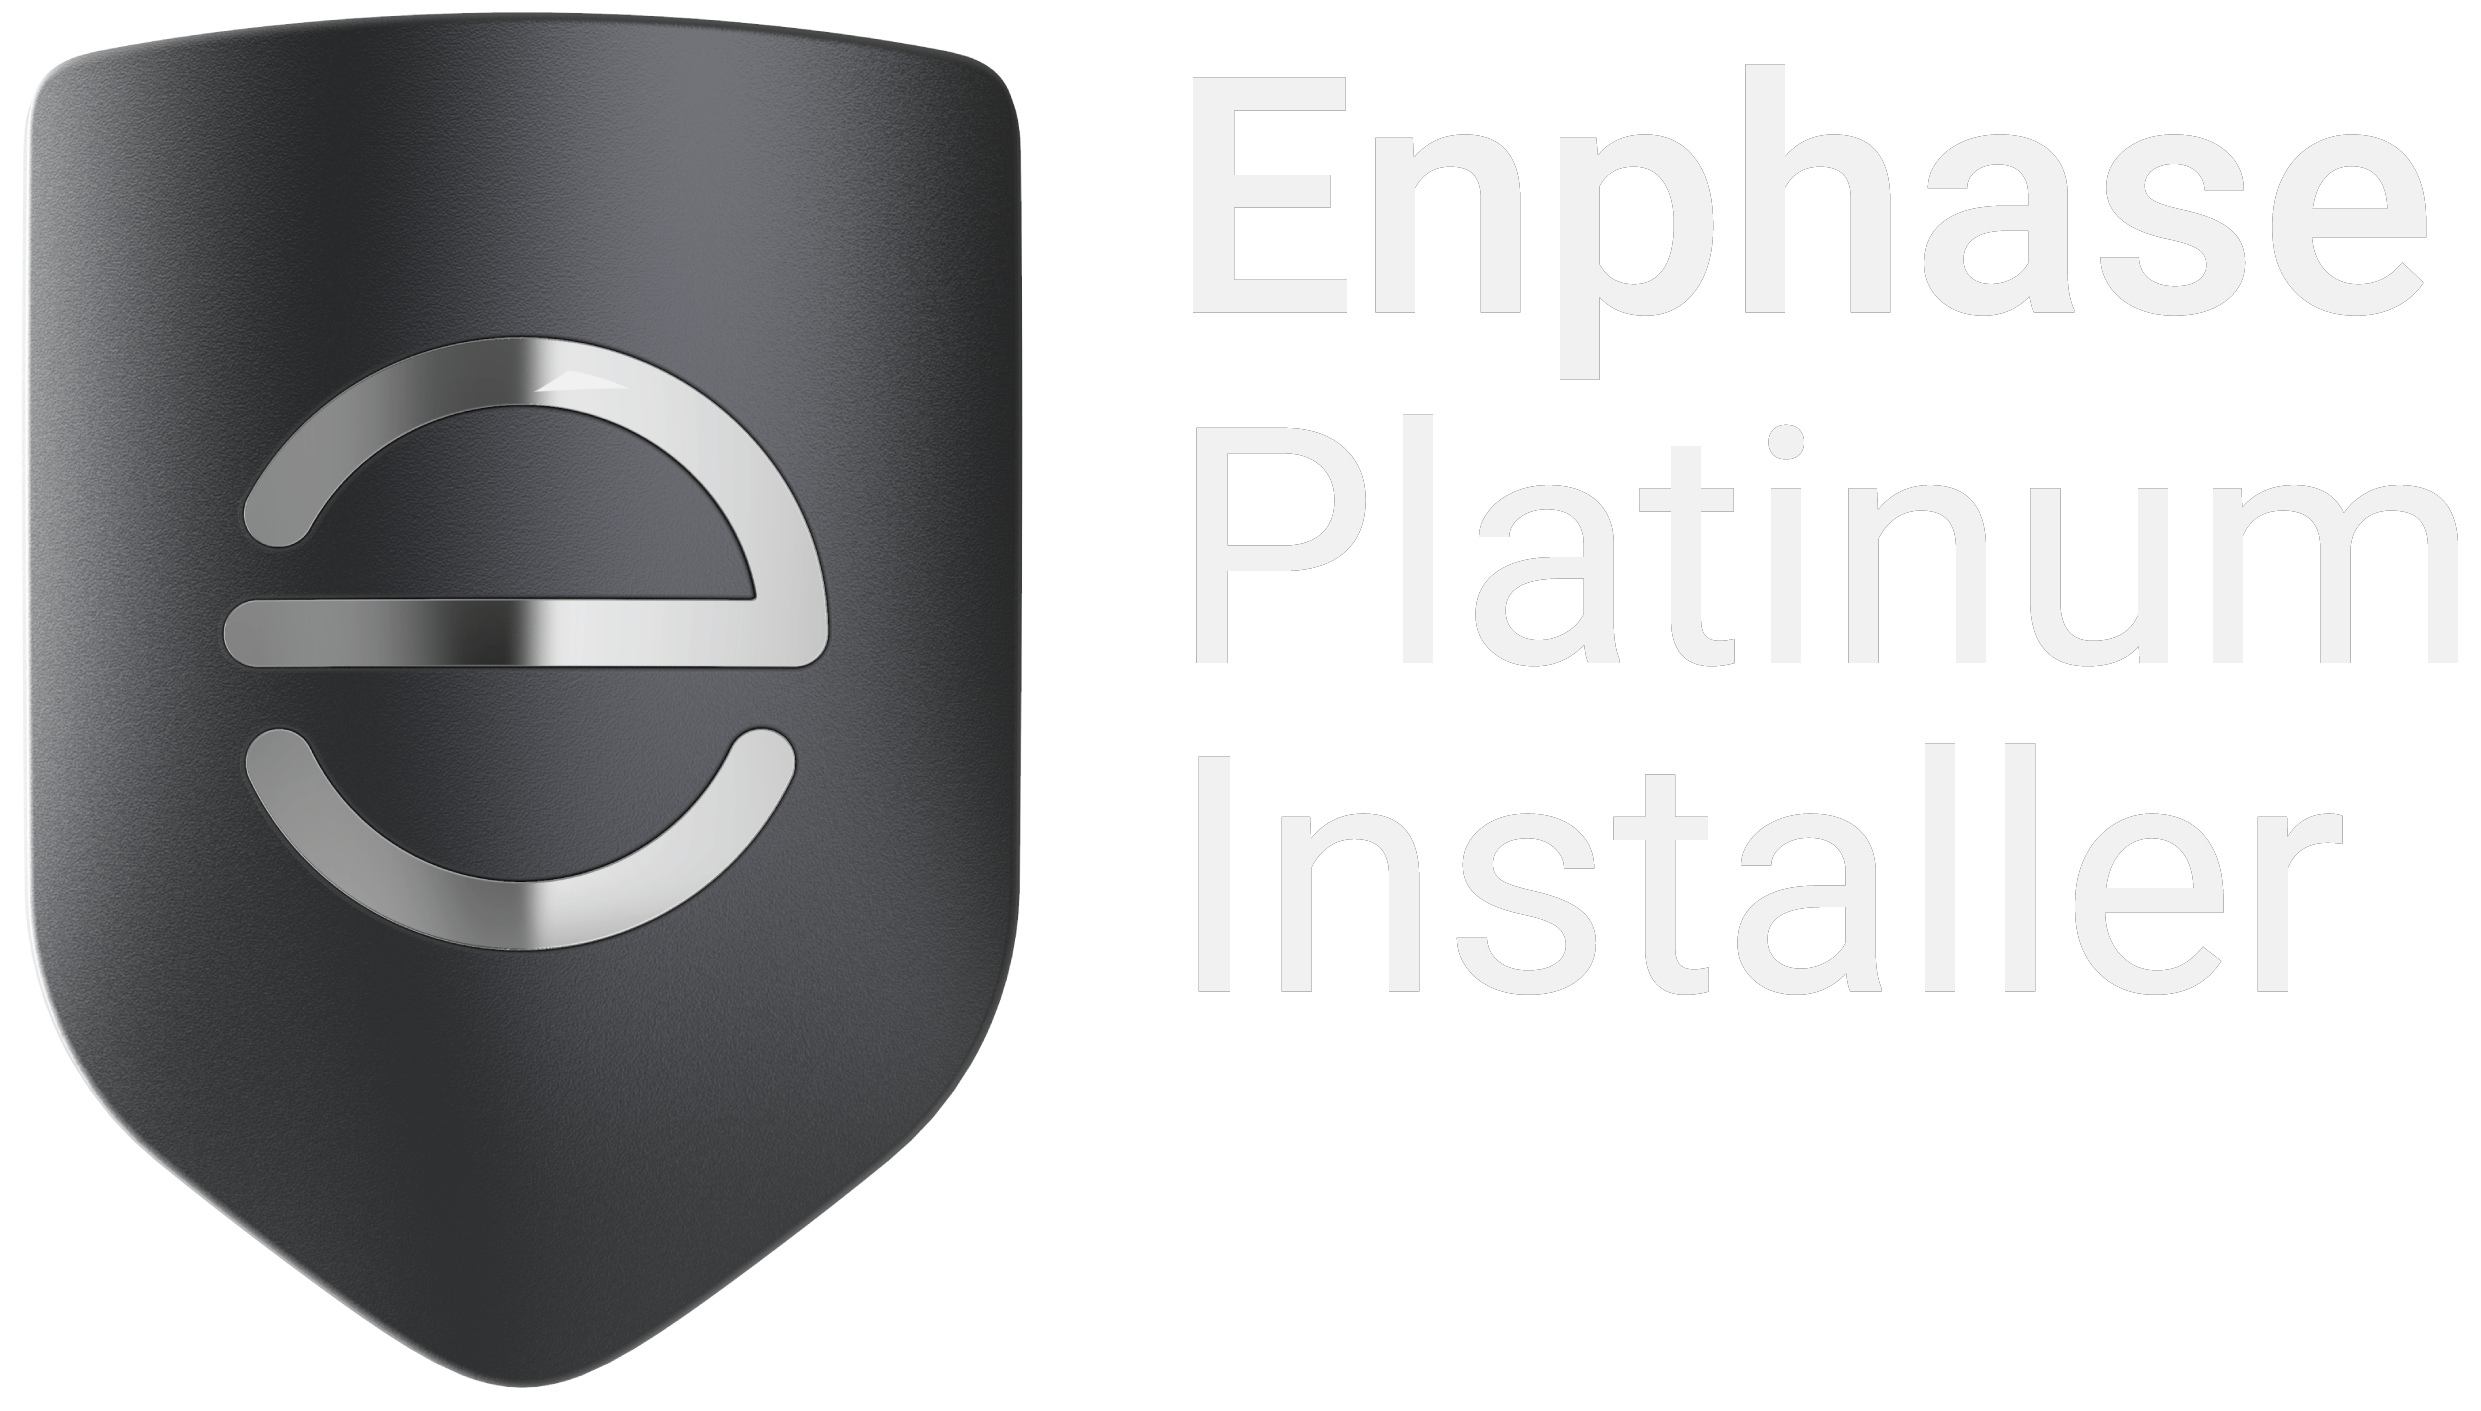 Enphase platinum badge